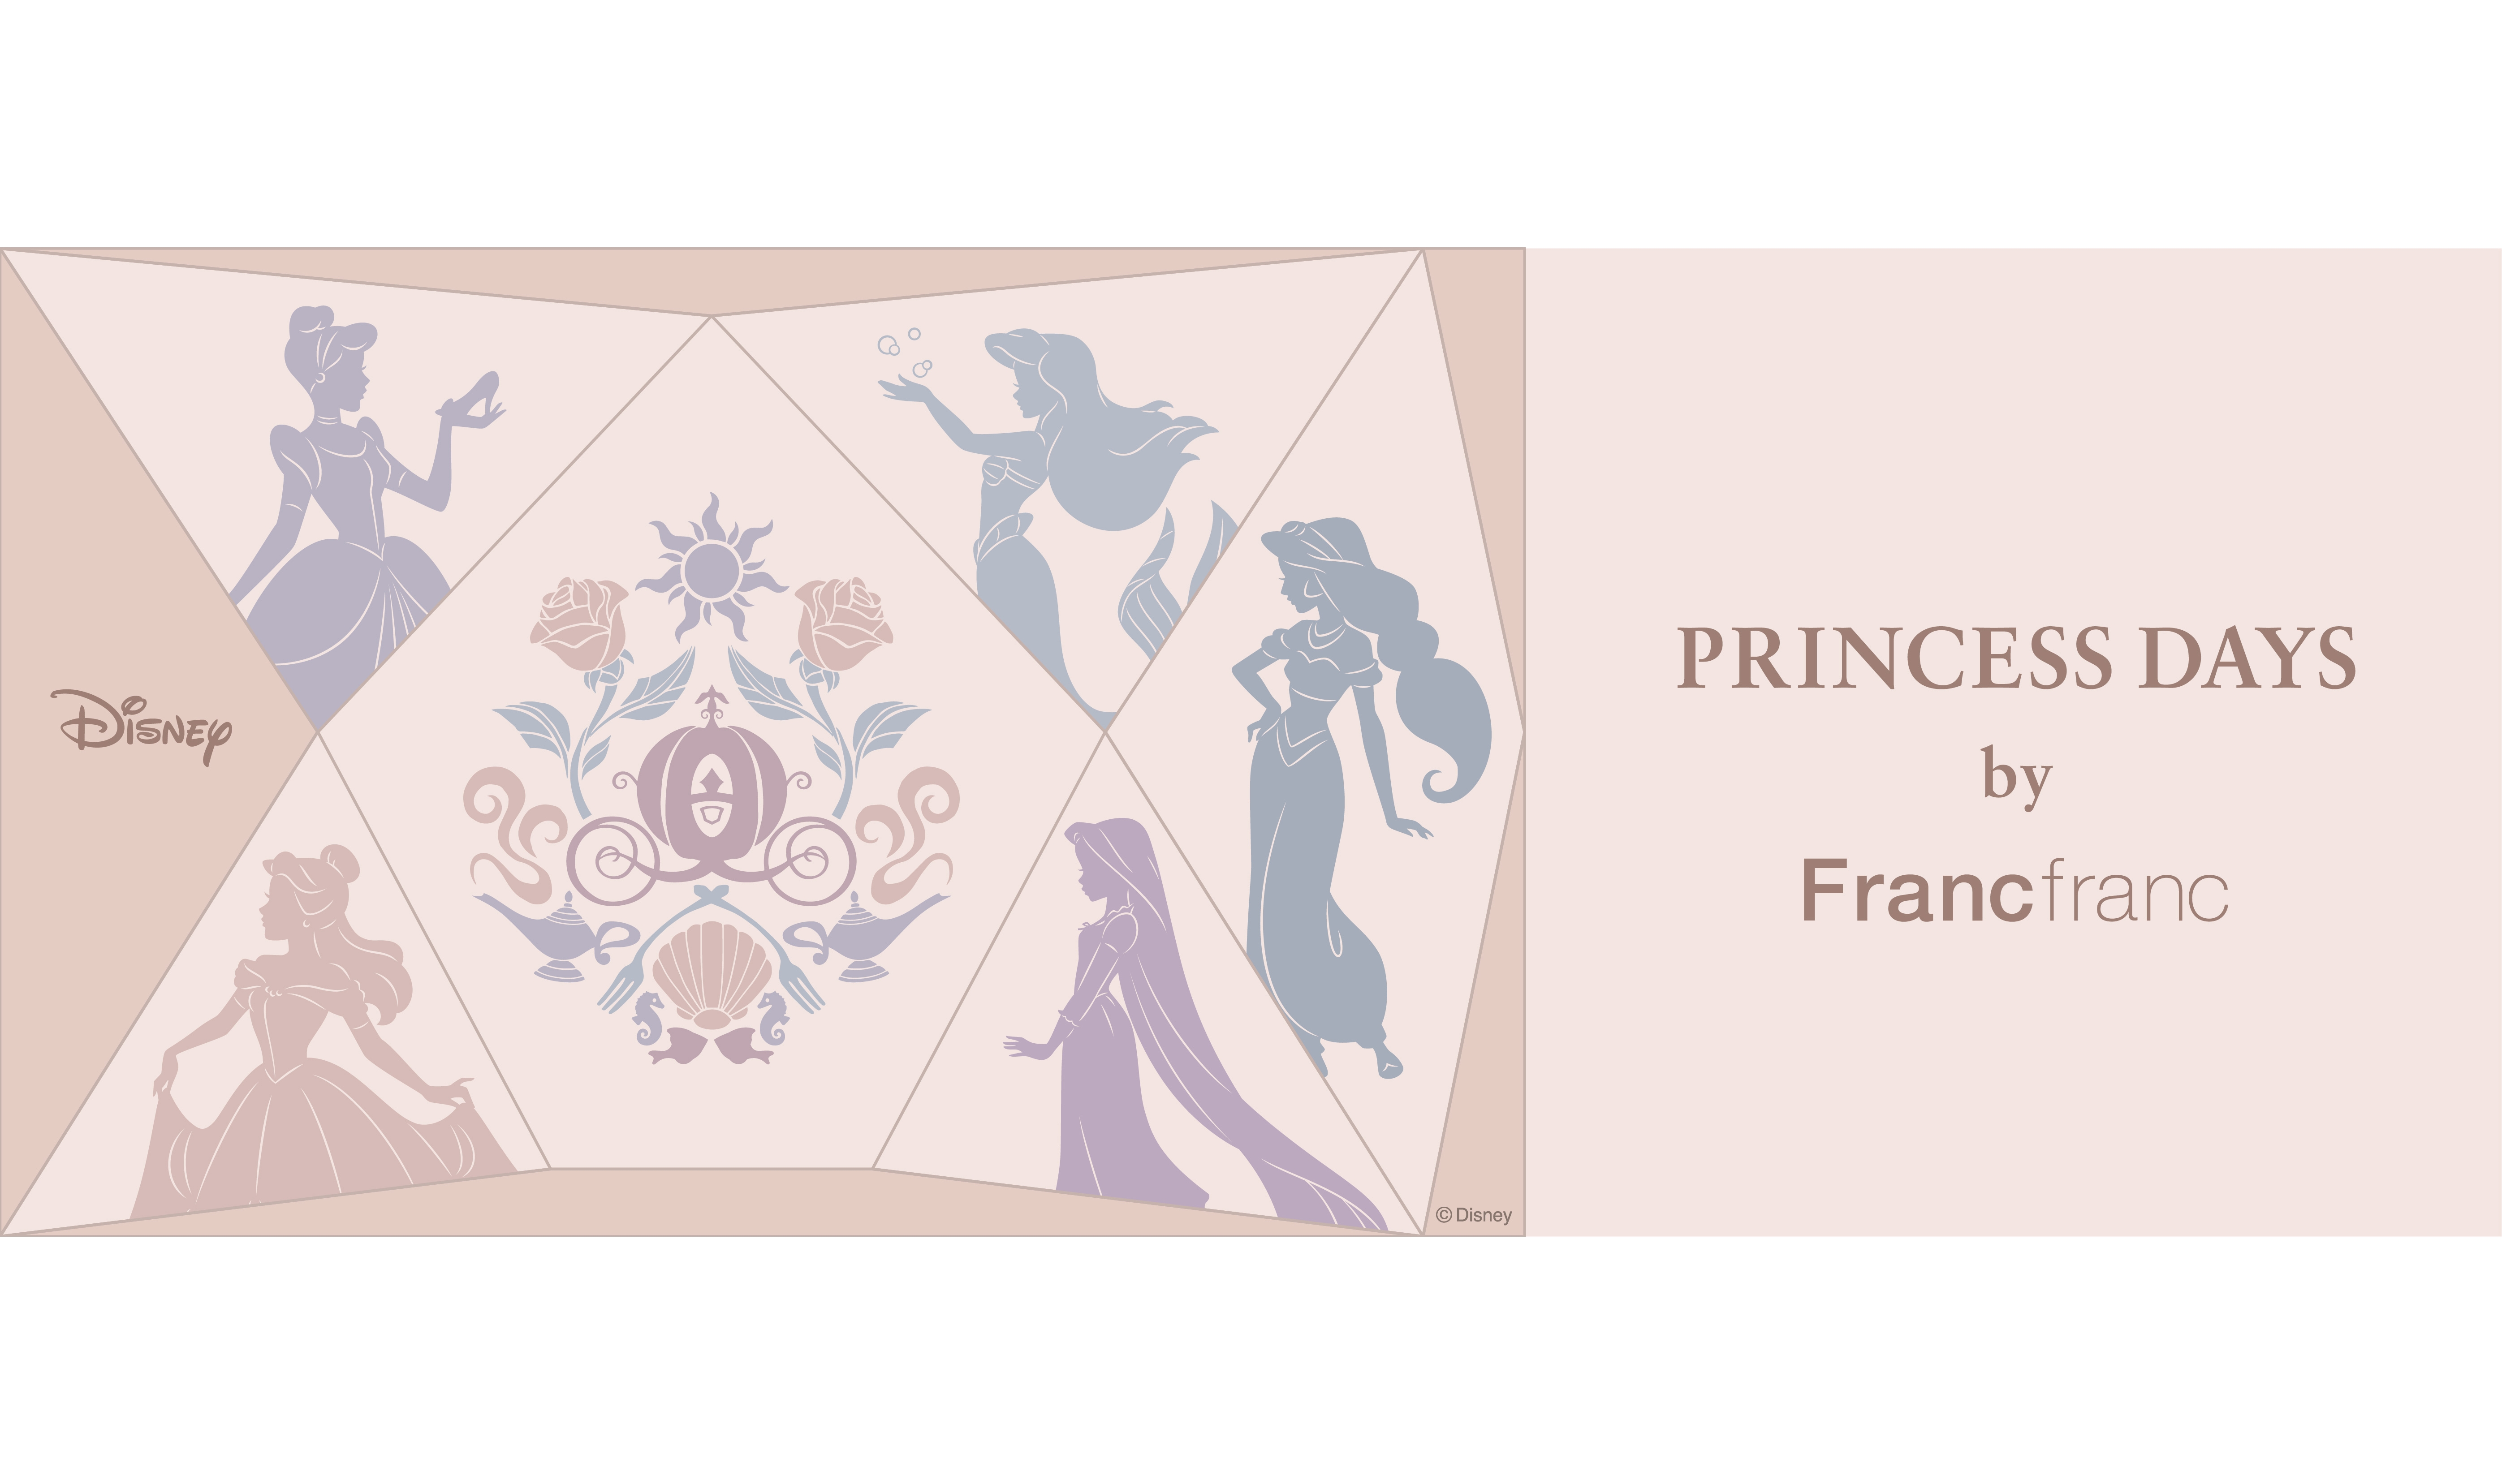 PRINCESS DAYS by Francfranc14